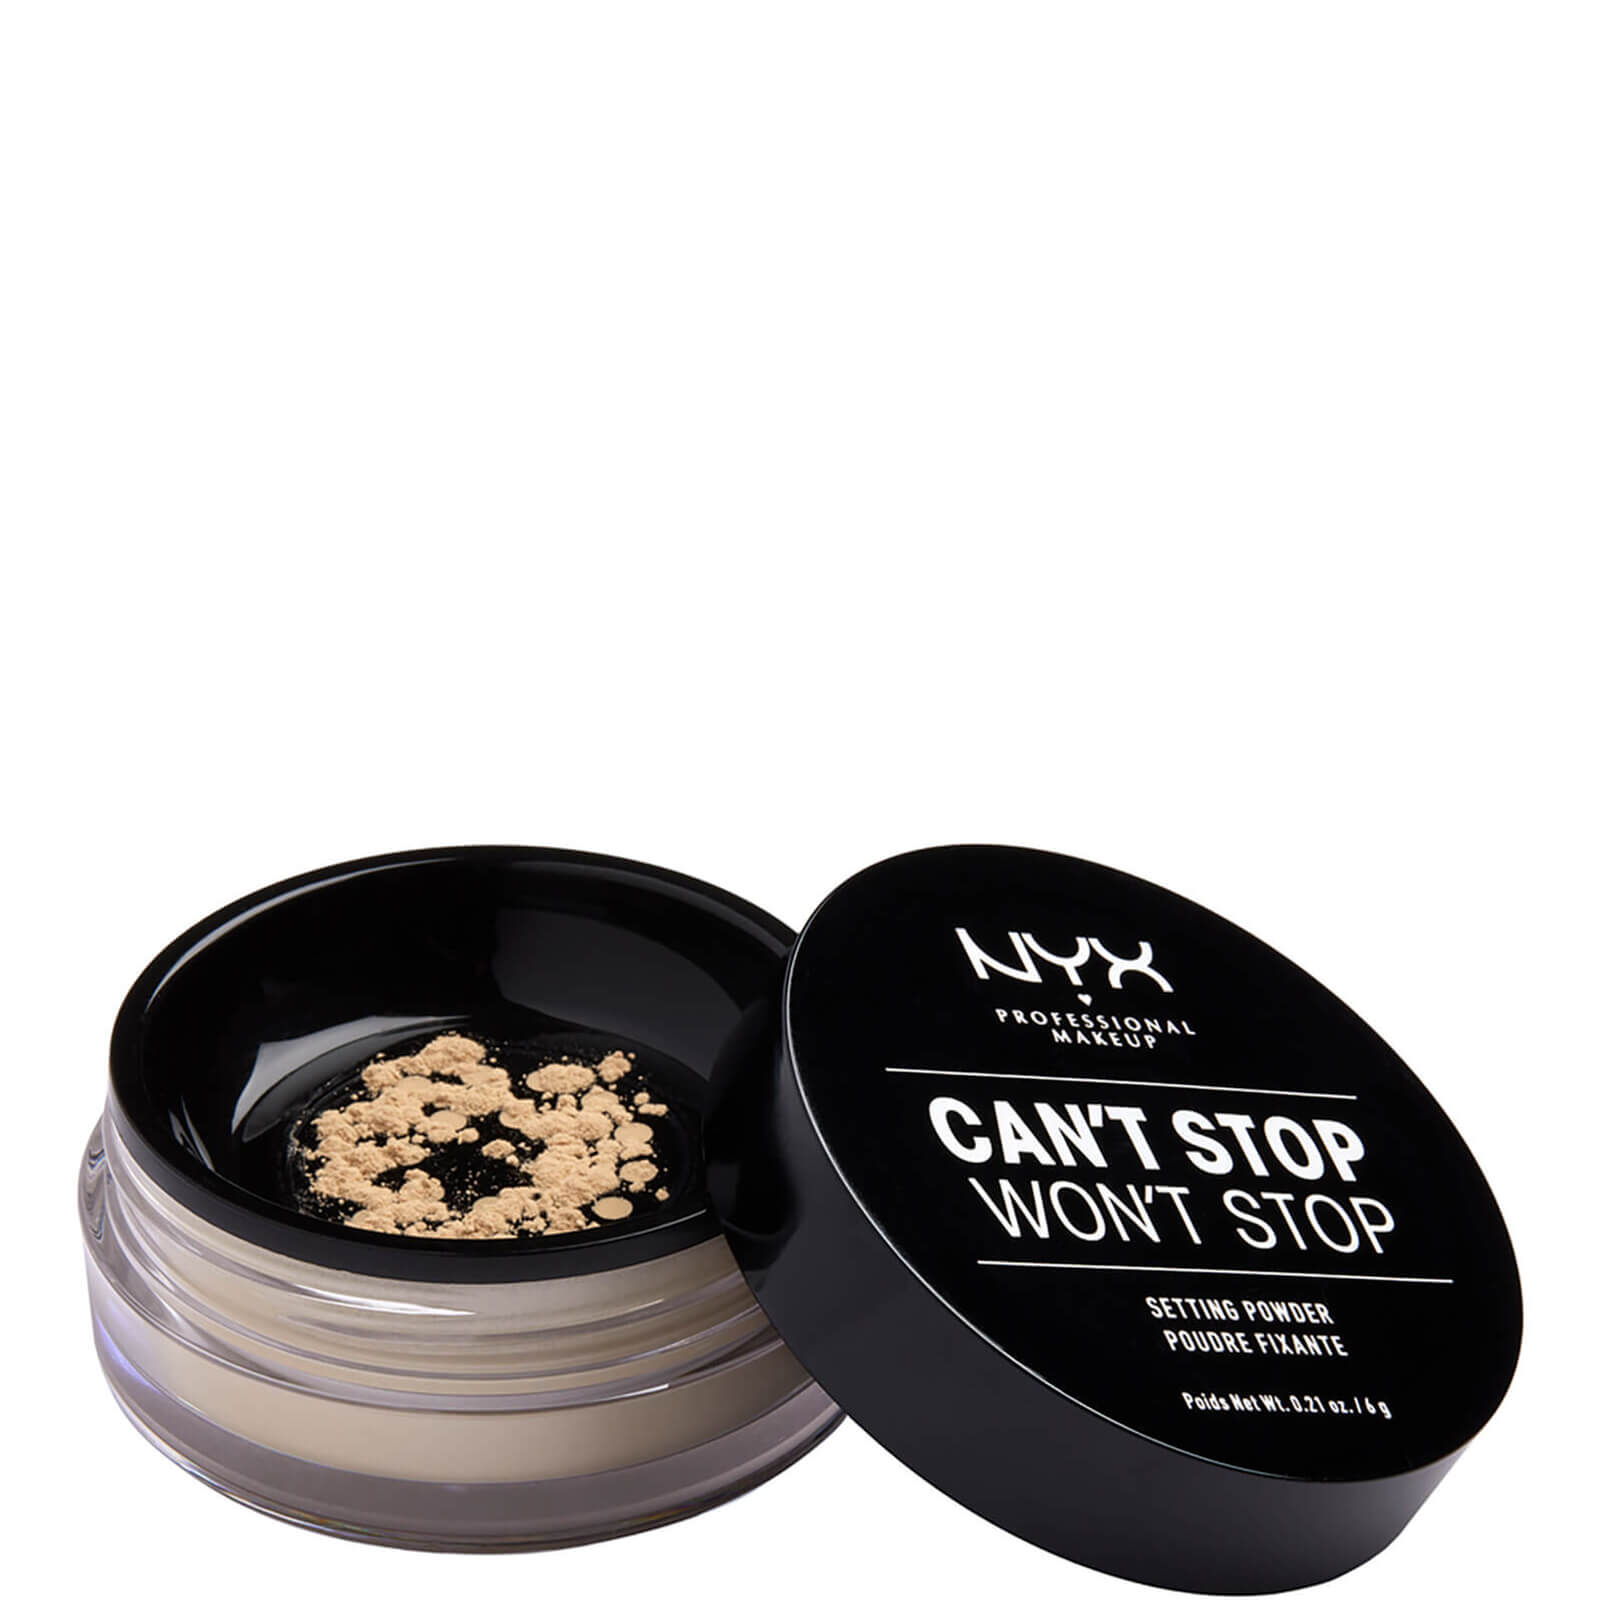 NYX Professional Makeup Can't Stop Won't Stop Setting Powder (Various Shades) - Light-Medium